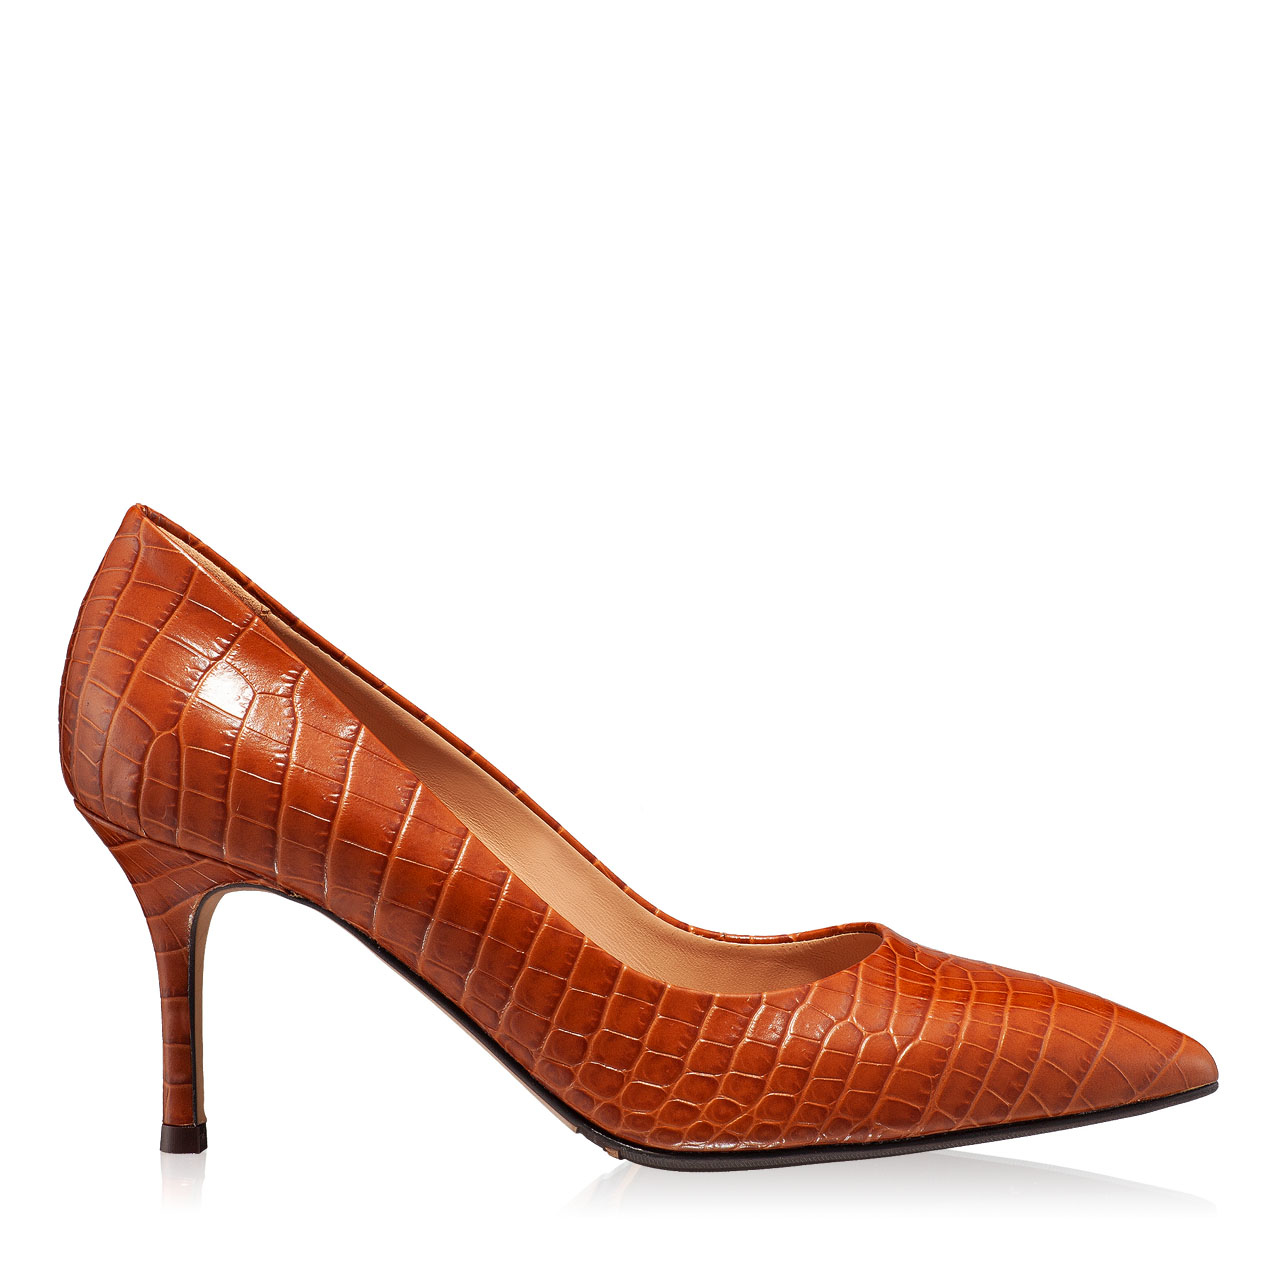 Pantofi eleganti dama 4416 Croco Cuoio